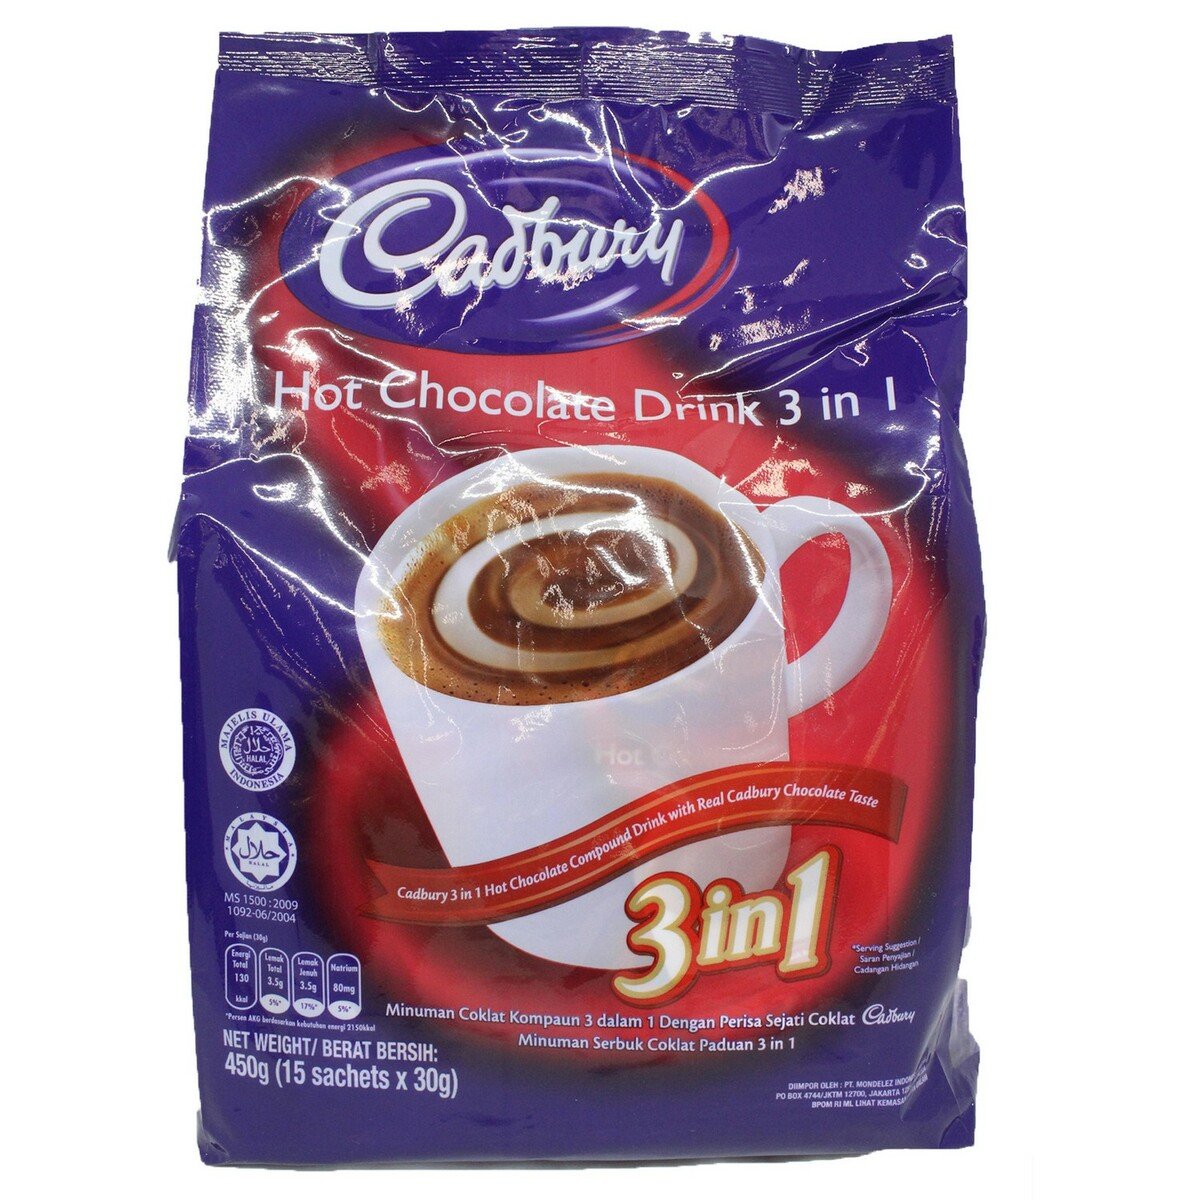 Cadbury 3in1 Hot Chocolate Drink 450g